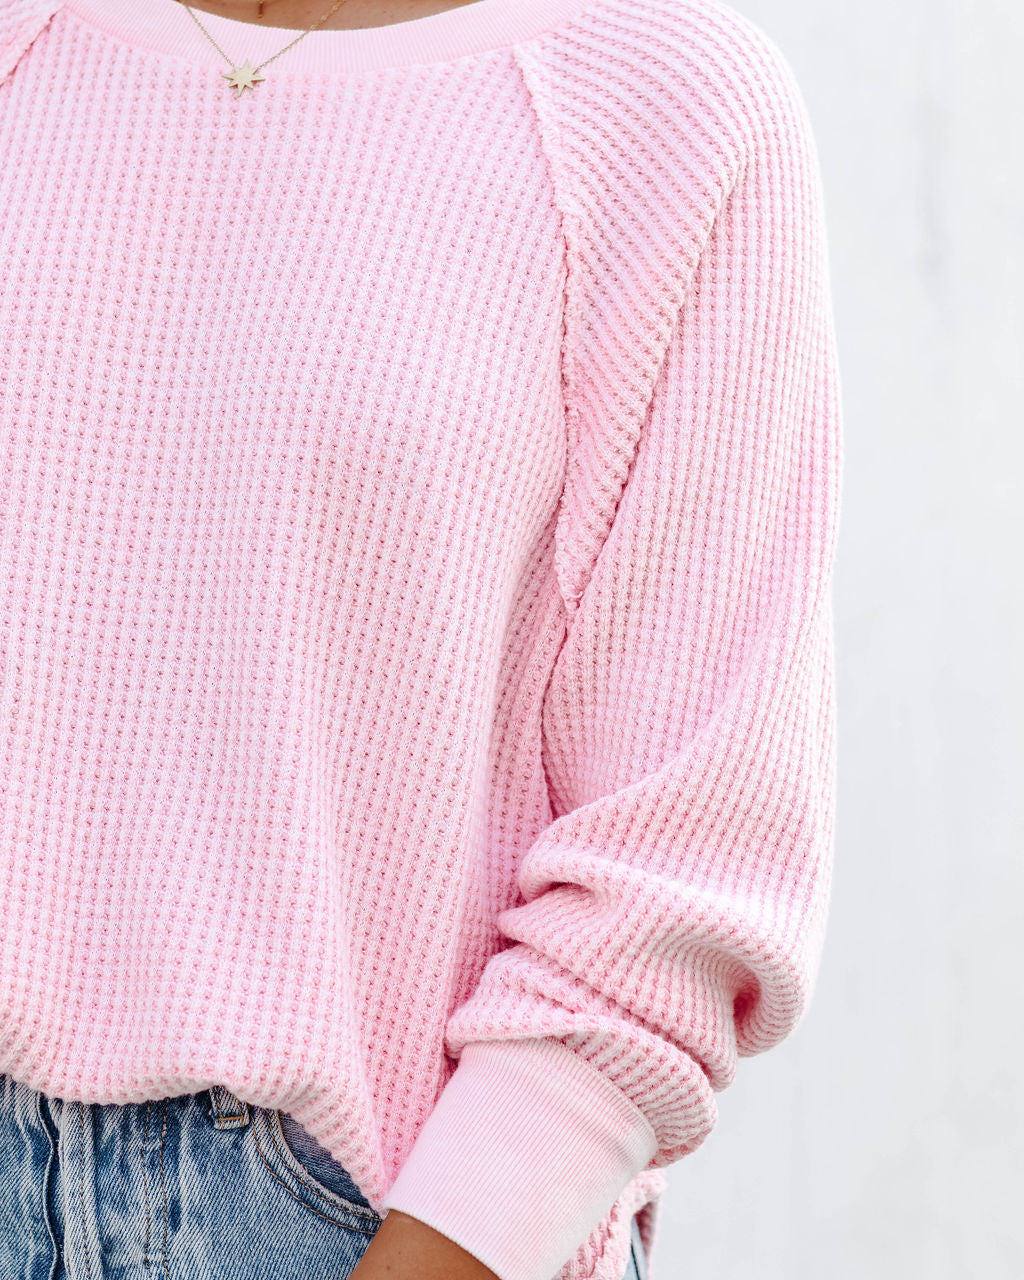 Lizabeth Cotton Thermal Knit Top - Pink